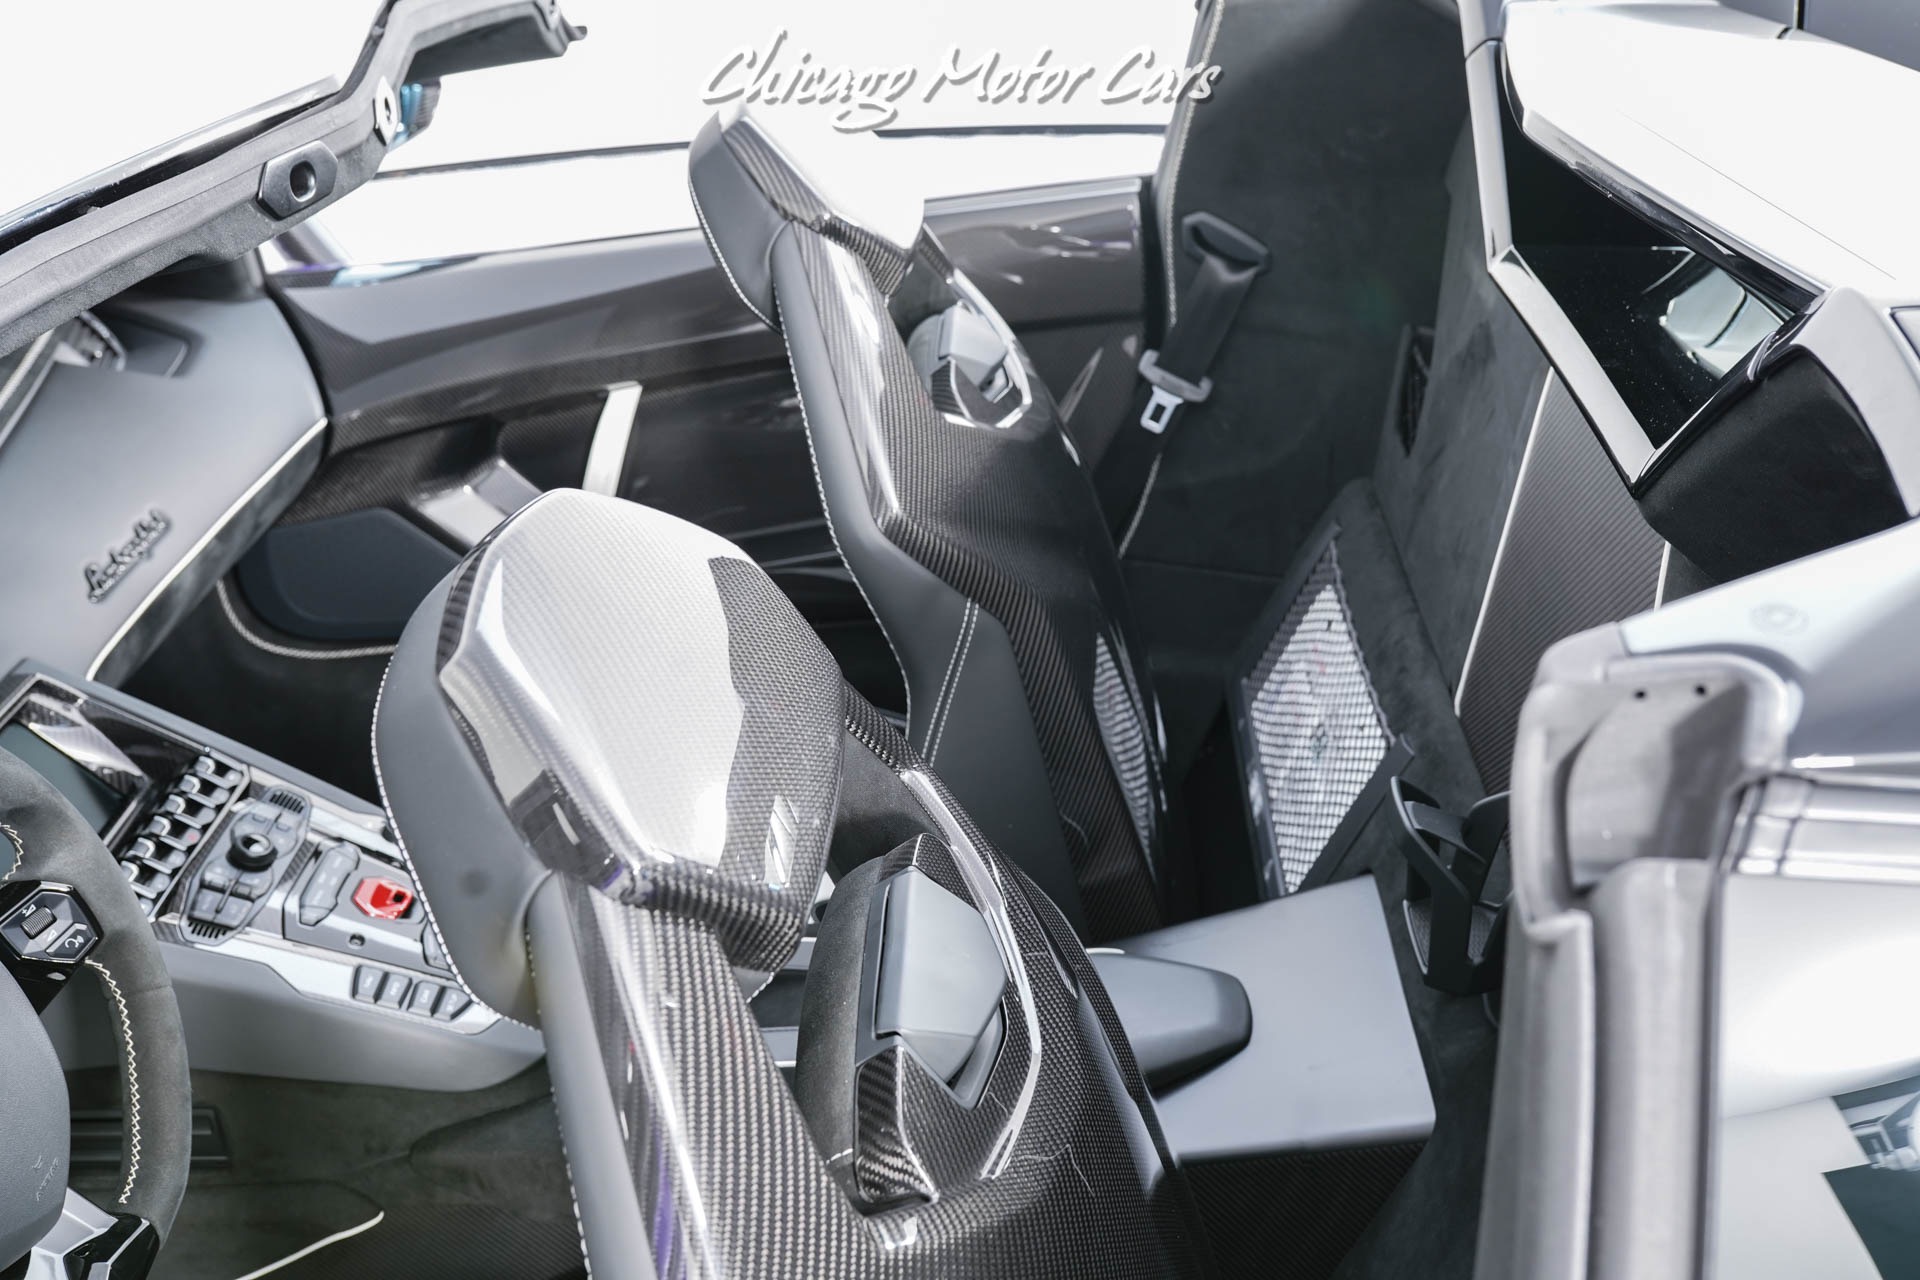 Used-2021-Lamborghini-Aventador-SVJ-Roadster-LP770-4-RARE-Viola-Pasifae-Tons-of-Carbon-Fiber